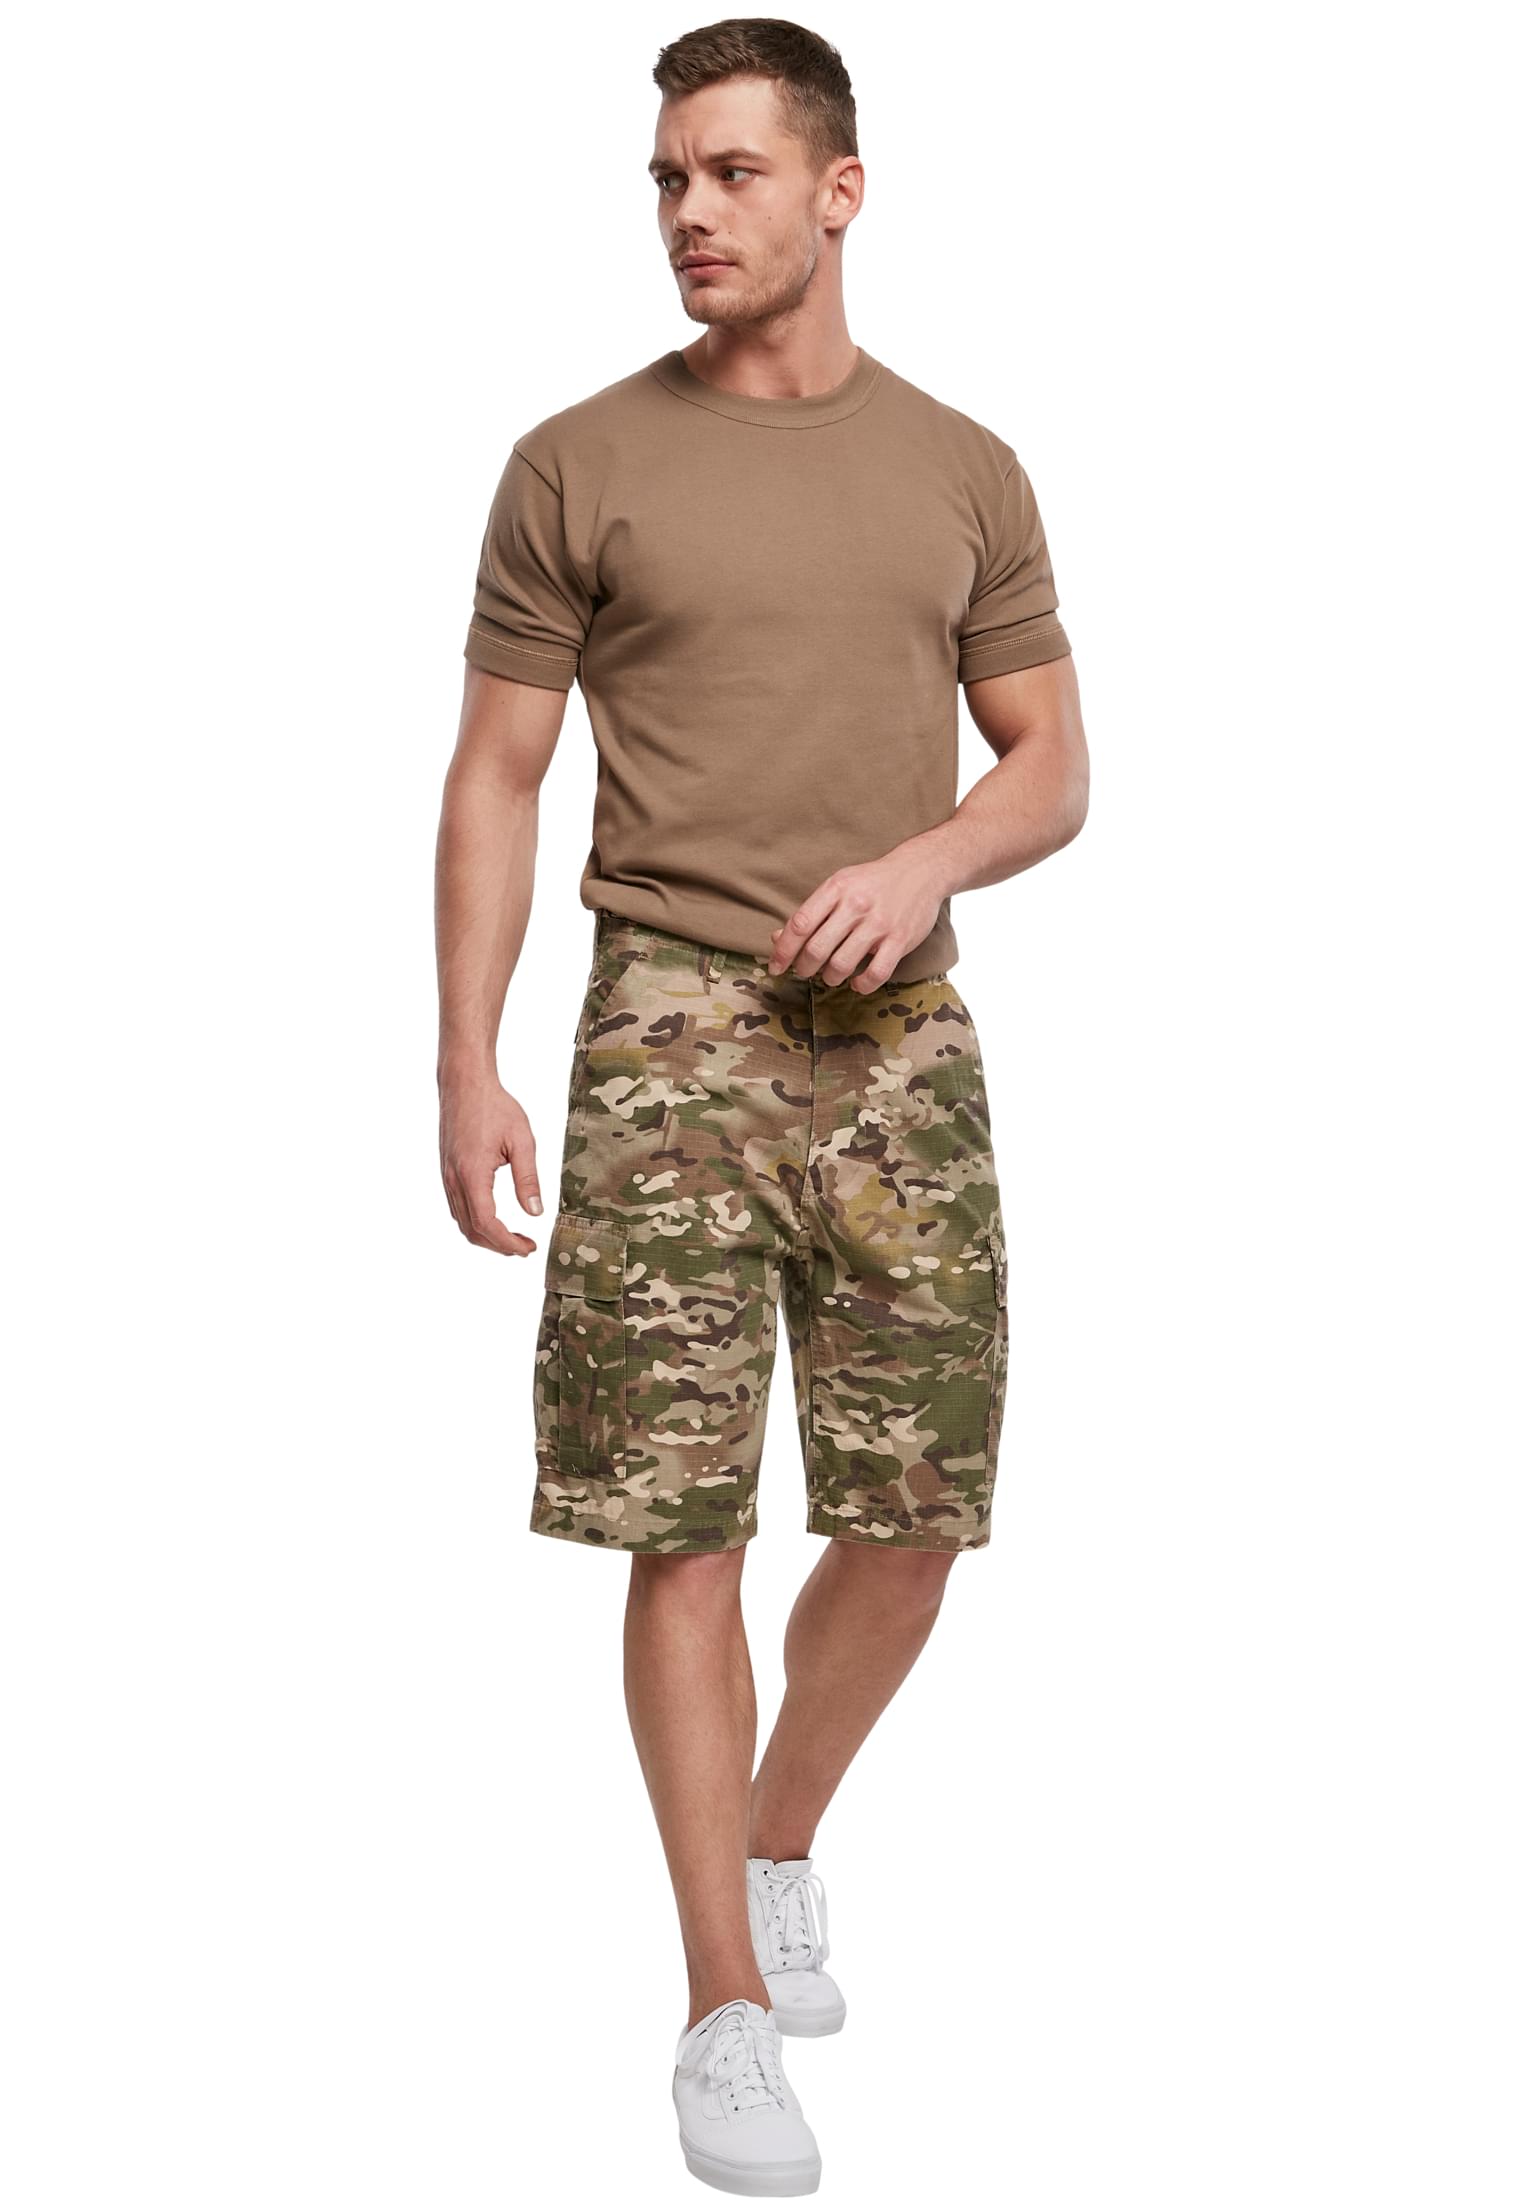 Shorts BDU Ripstop Shorts in Farbe tactical camo